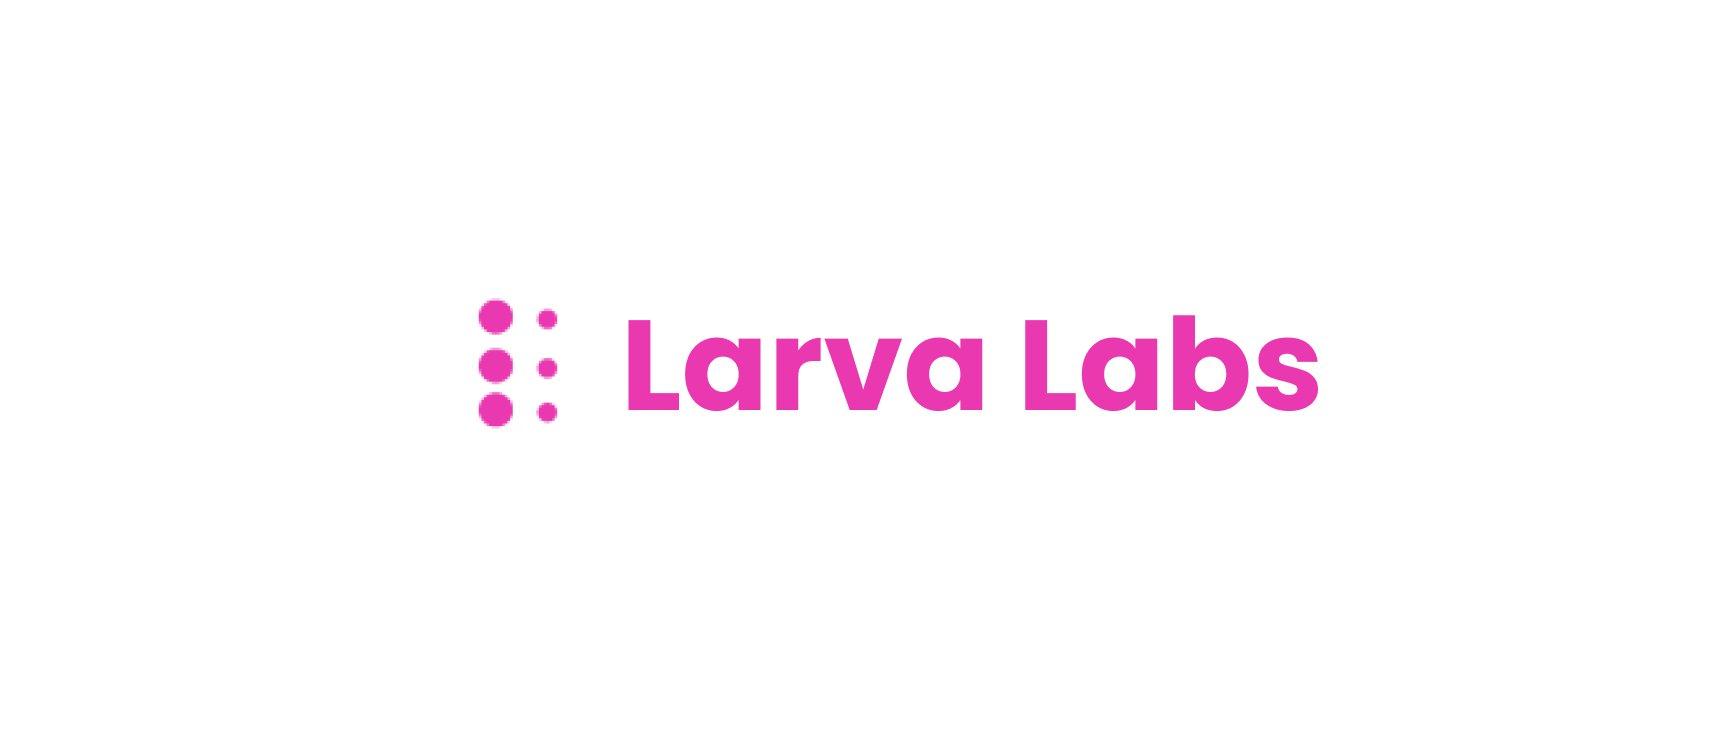 updated logo of larva labs